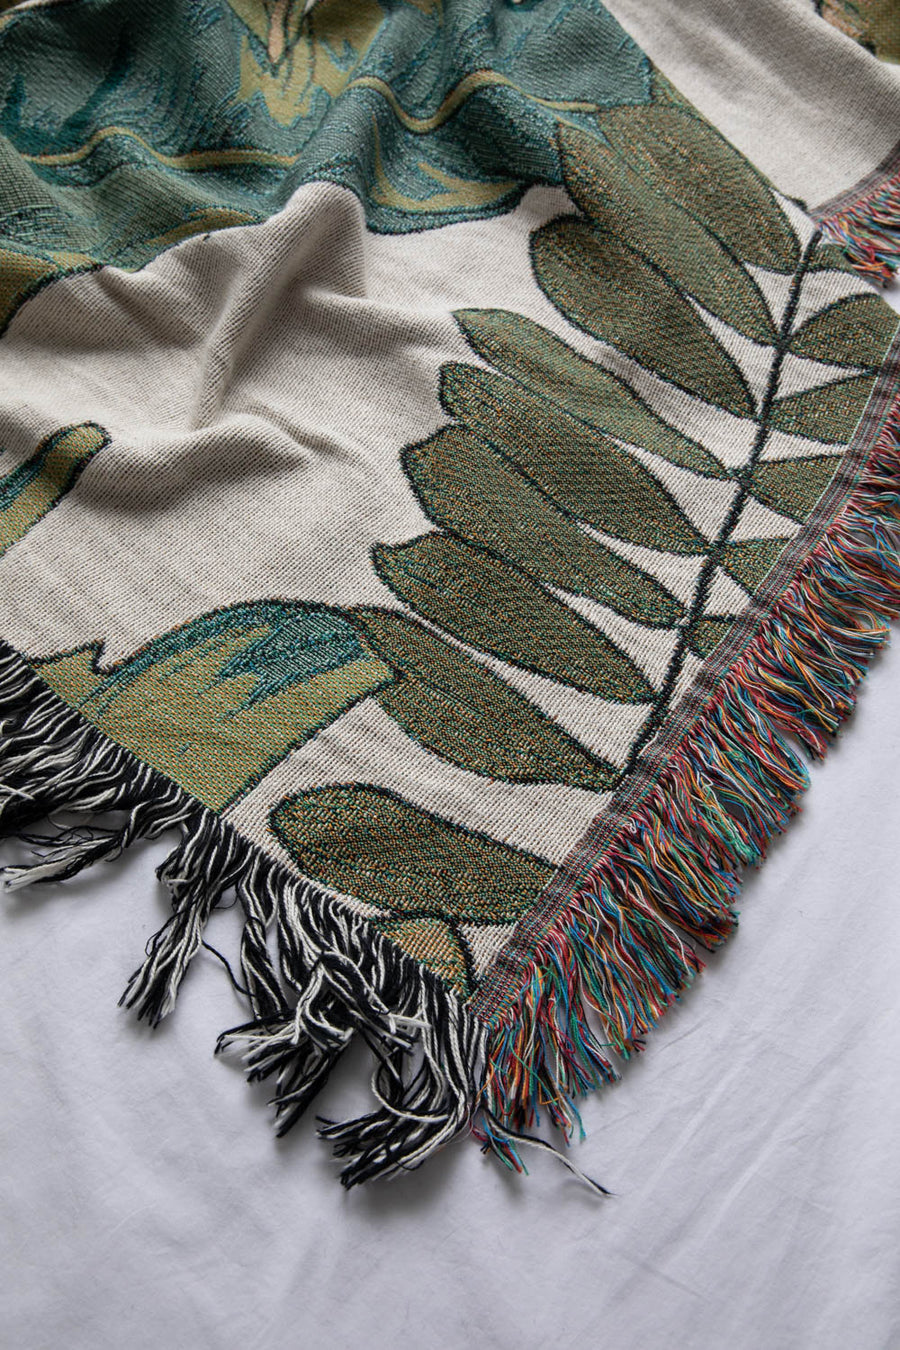 Palm Leaf Woven Throw Blanket – Good Merchant Co